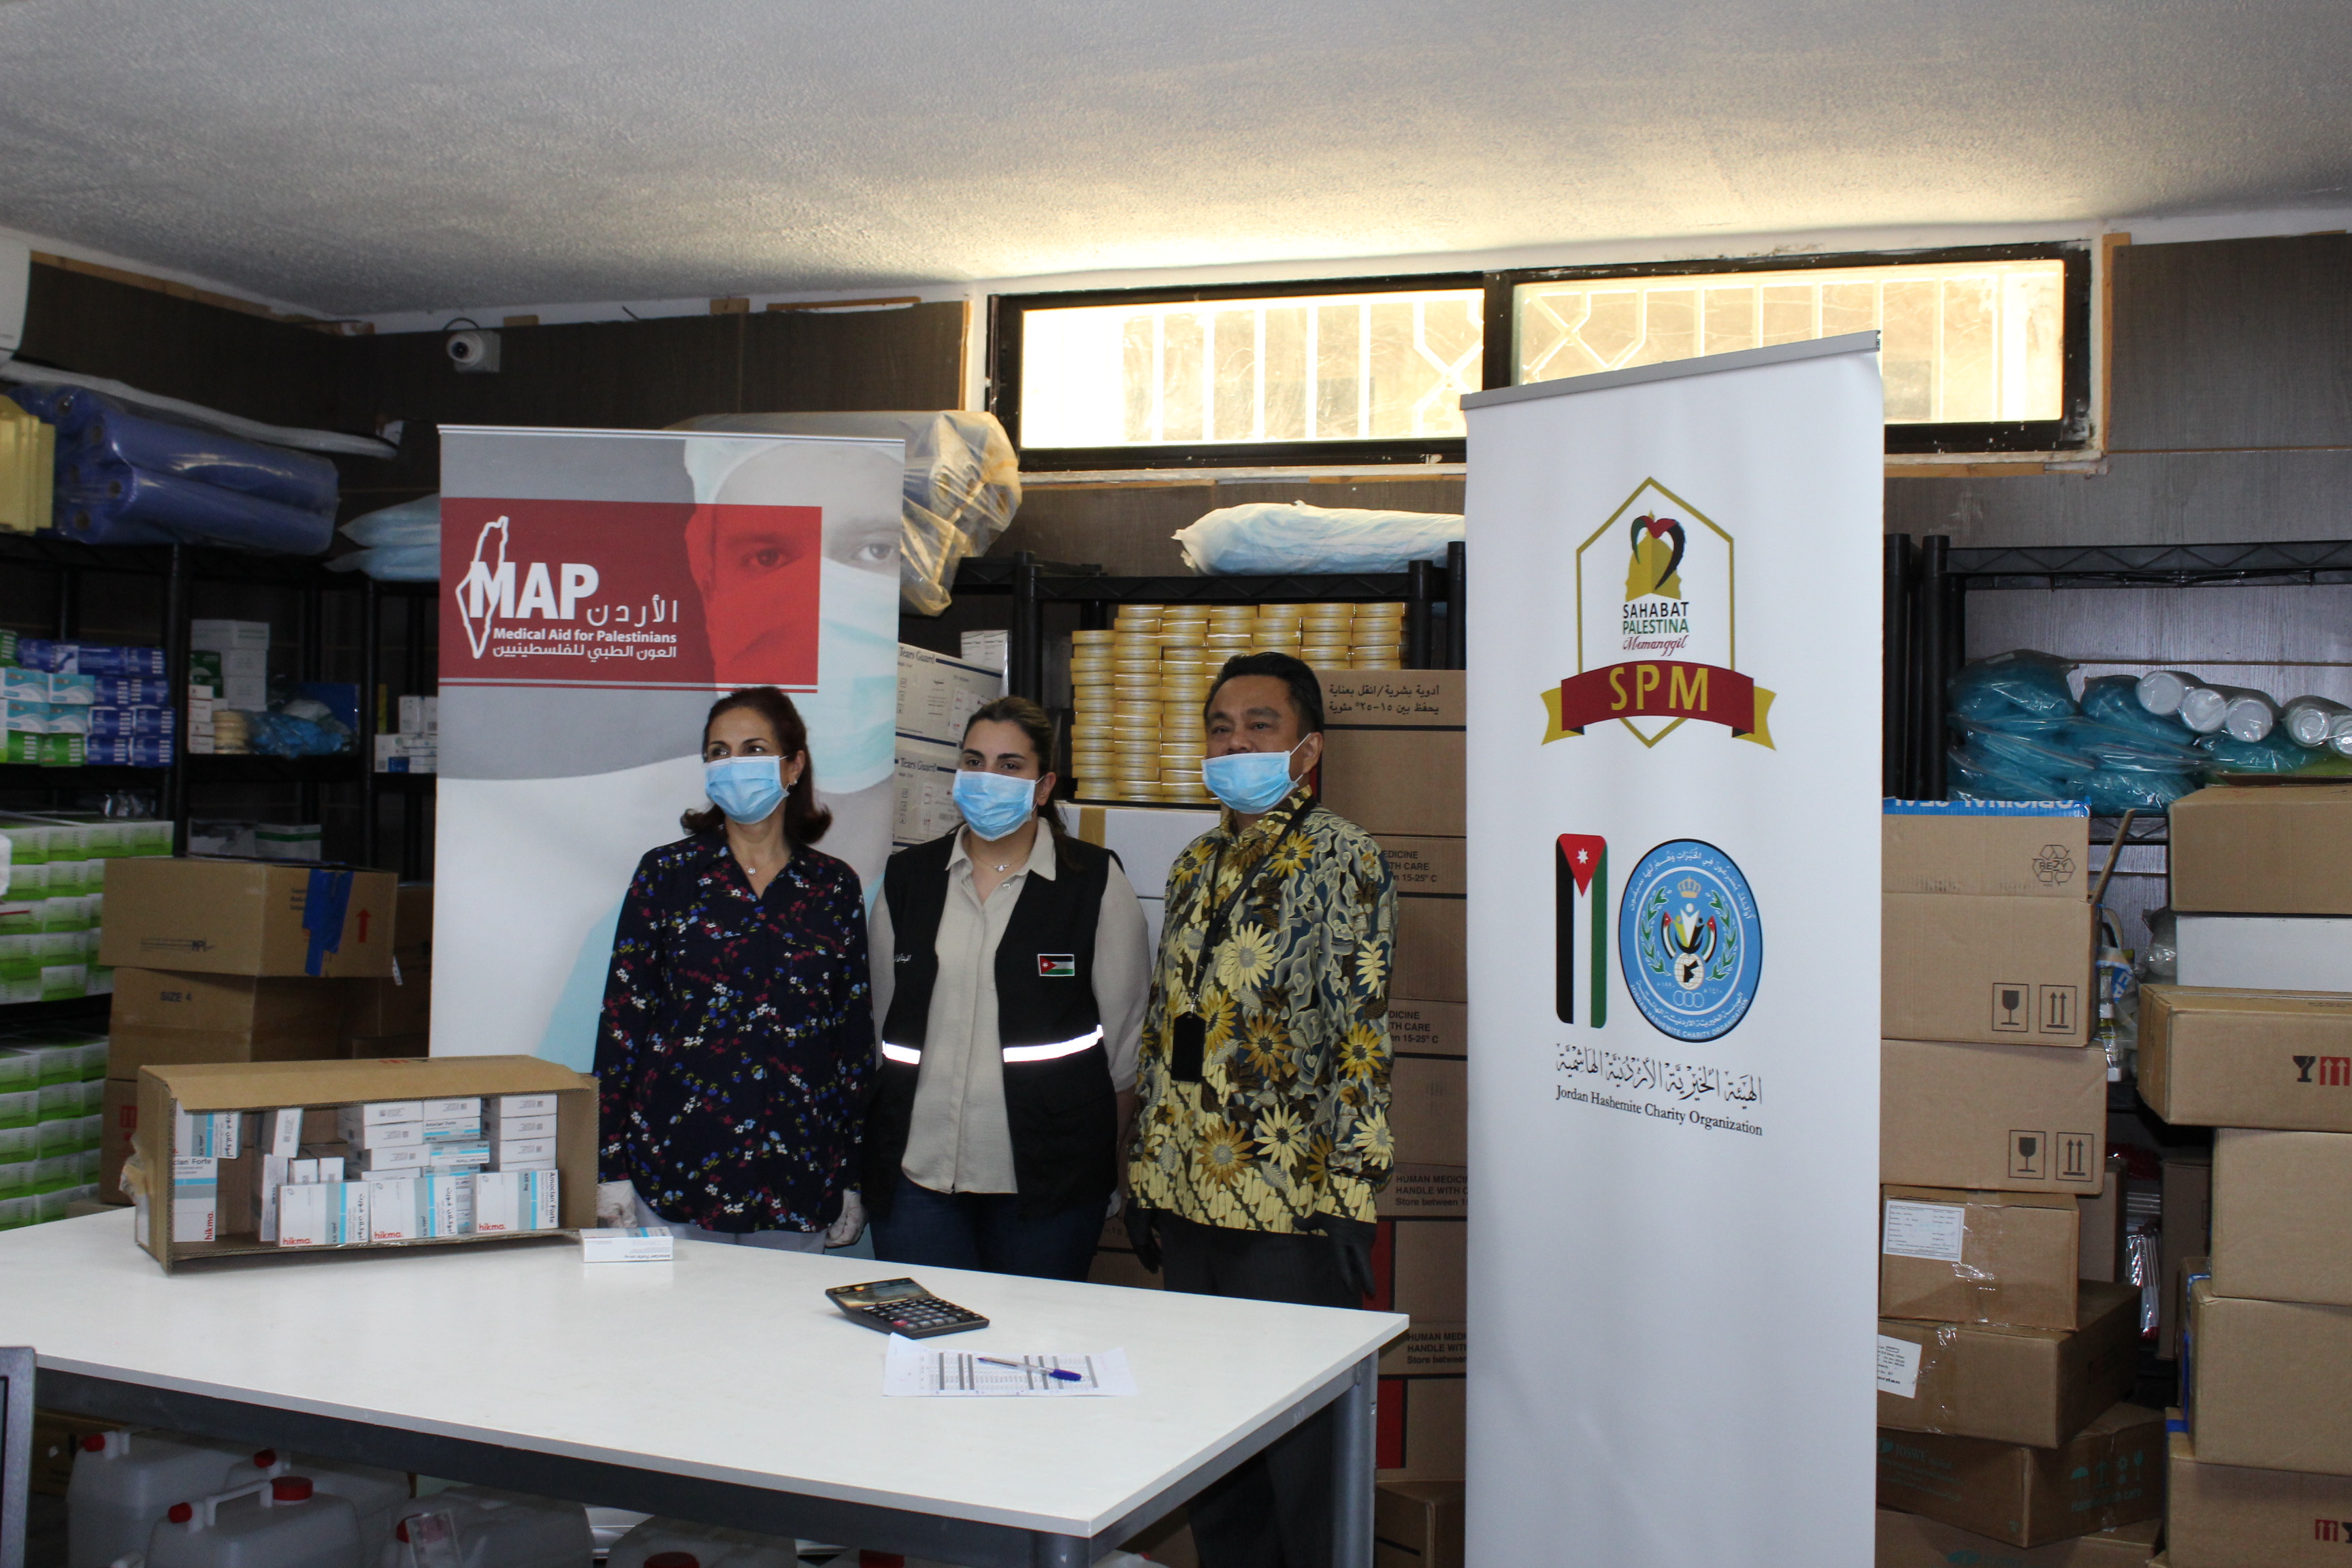 SPM Indonesian Organization donates medications to MAP Jordan through the Jordan Hashemite Charity Organization 